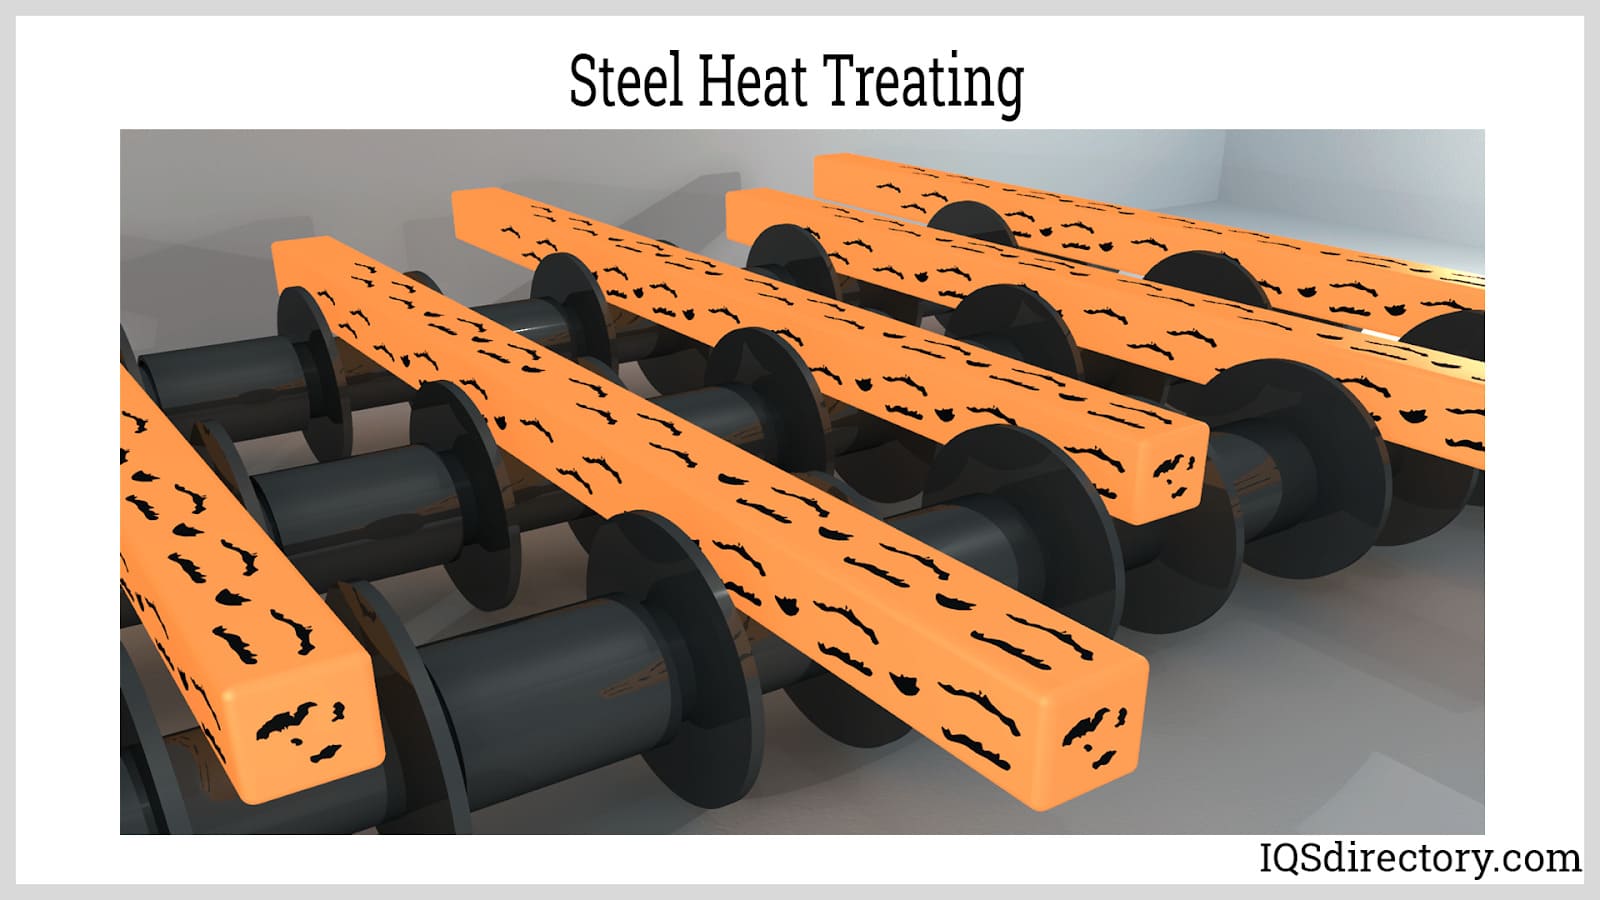 Steel Heat Treating